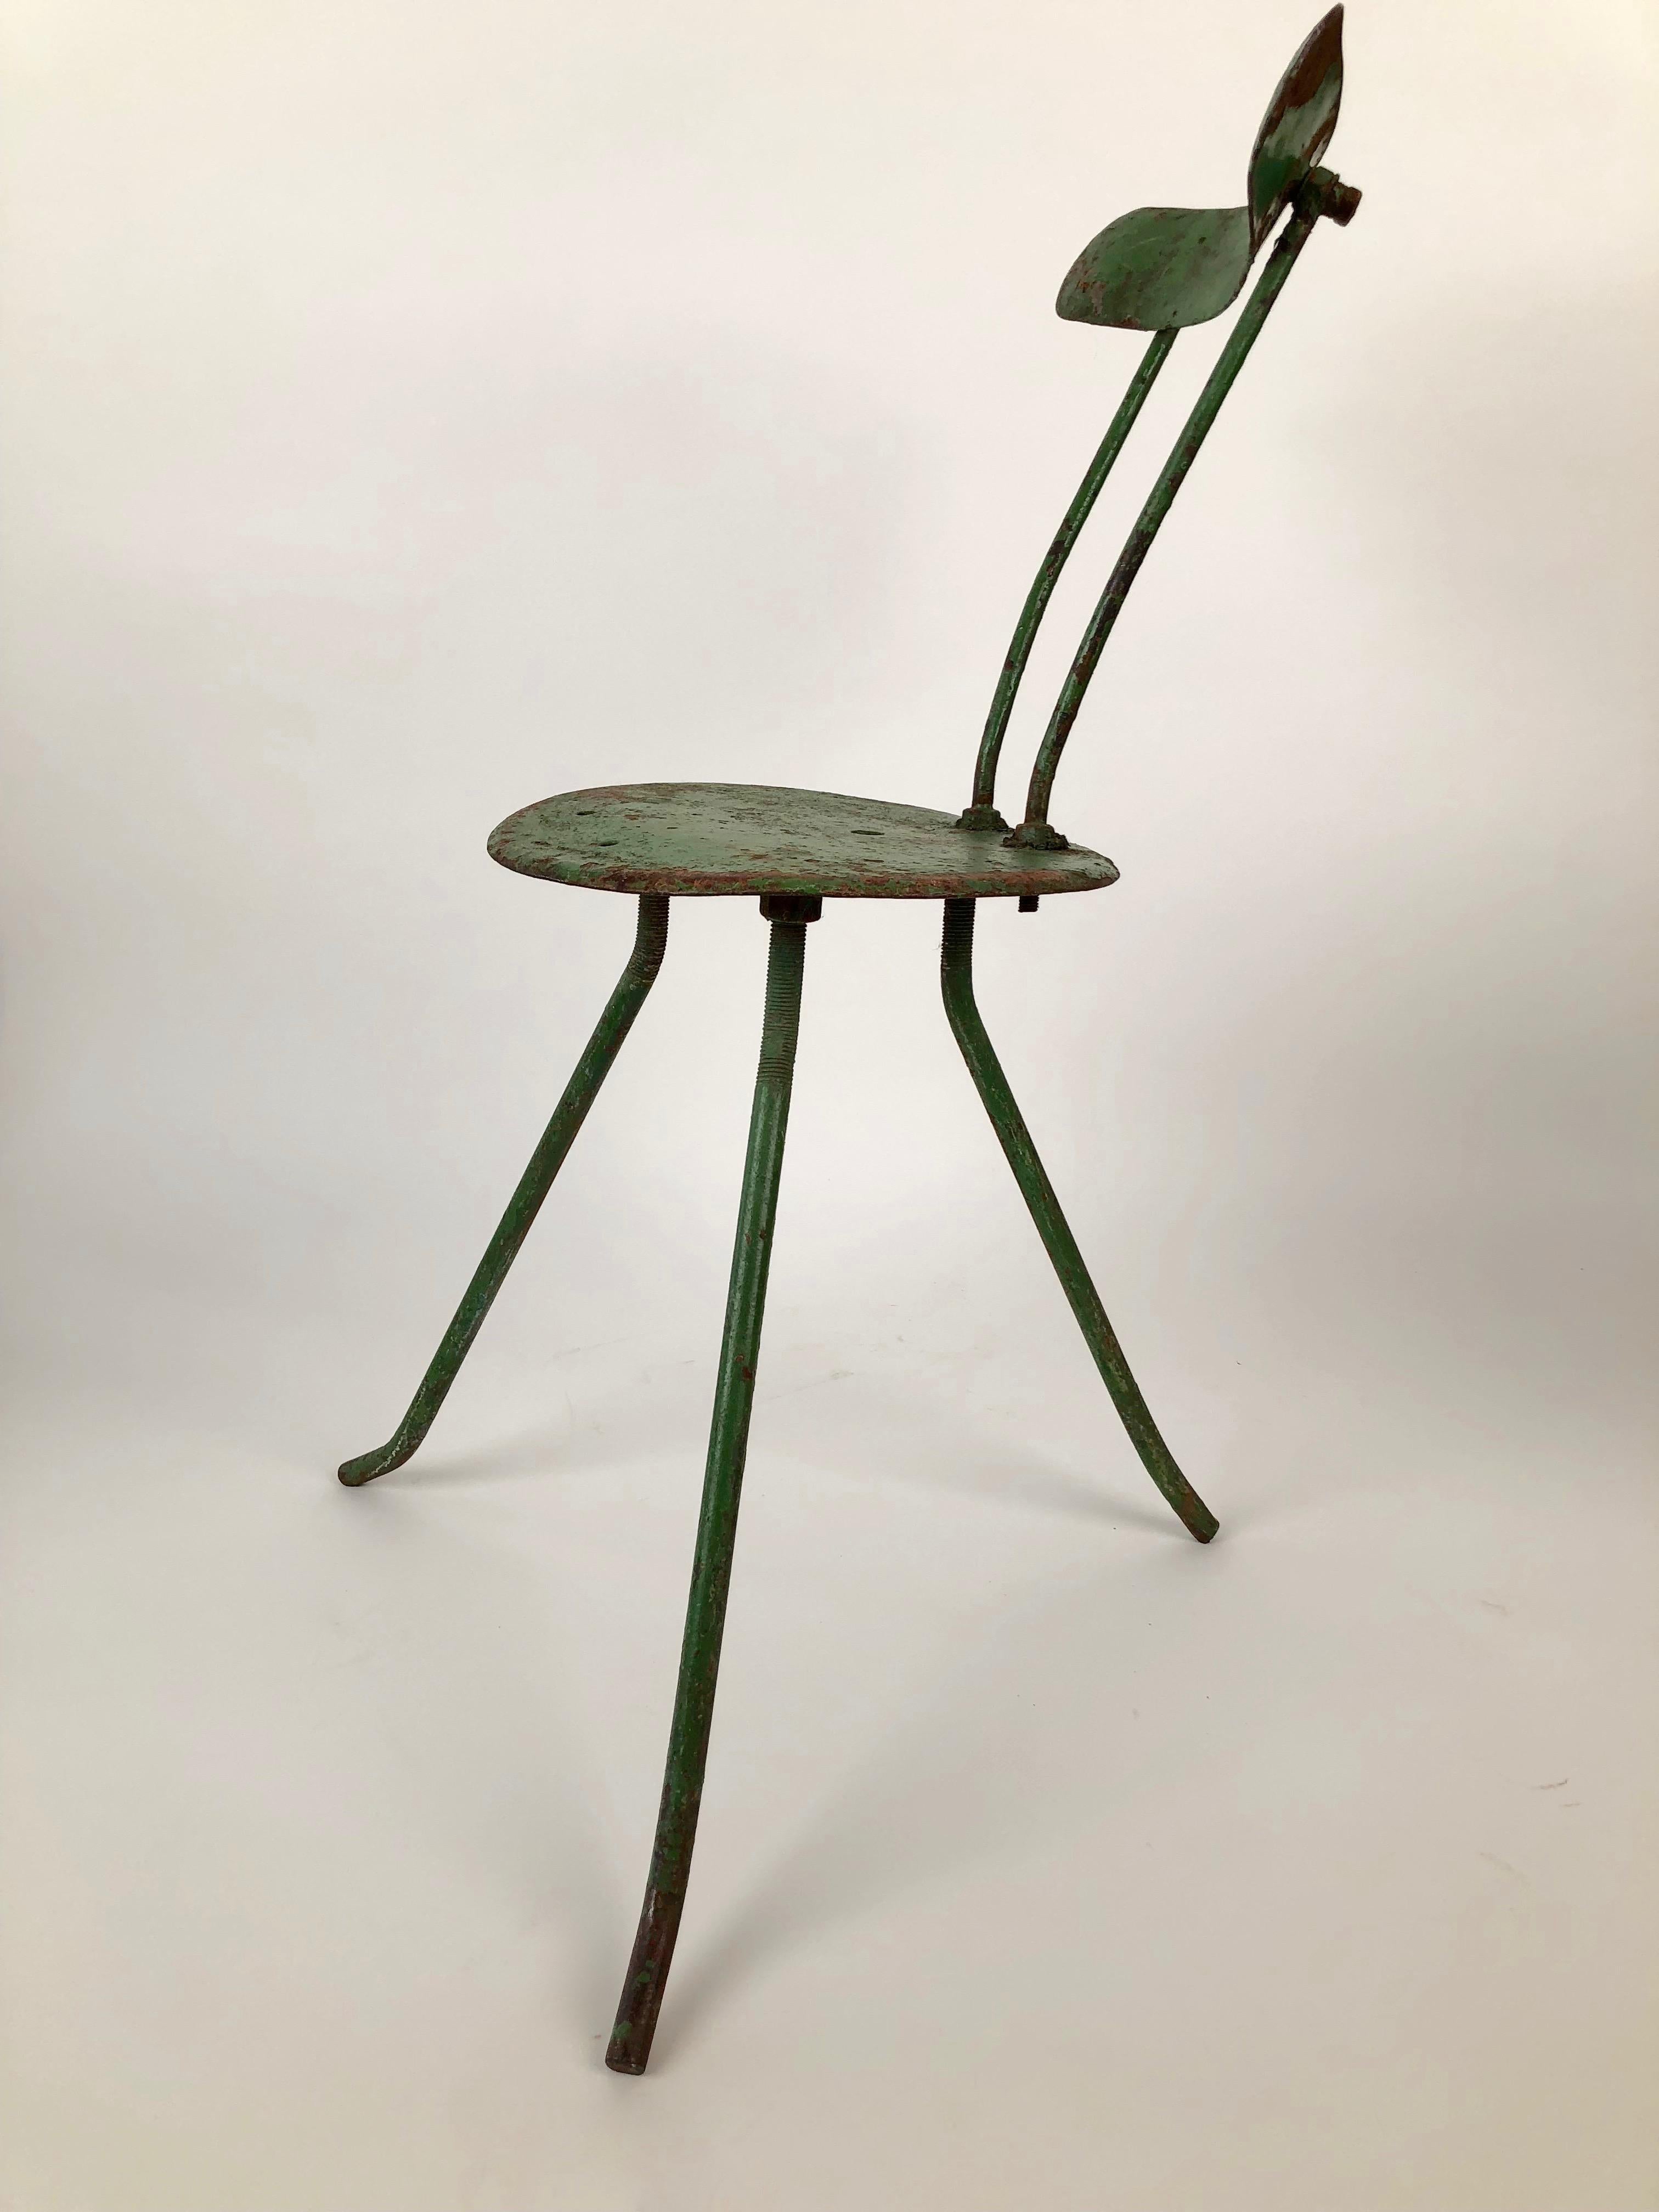 Pair of Handmade Metal Chairs, 1950s, from the Balaton Lake Region, Hungary For Sale 5